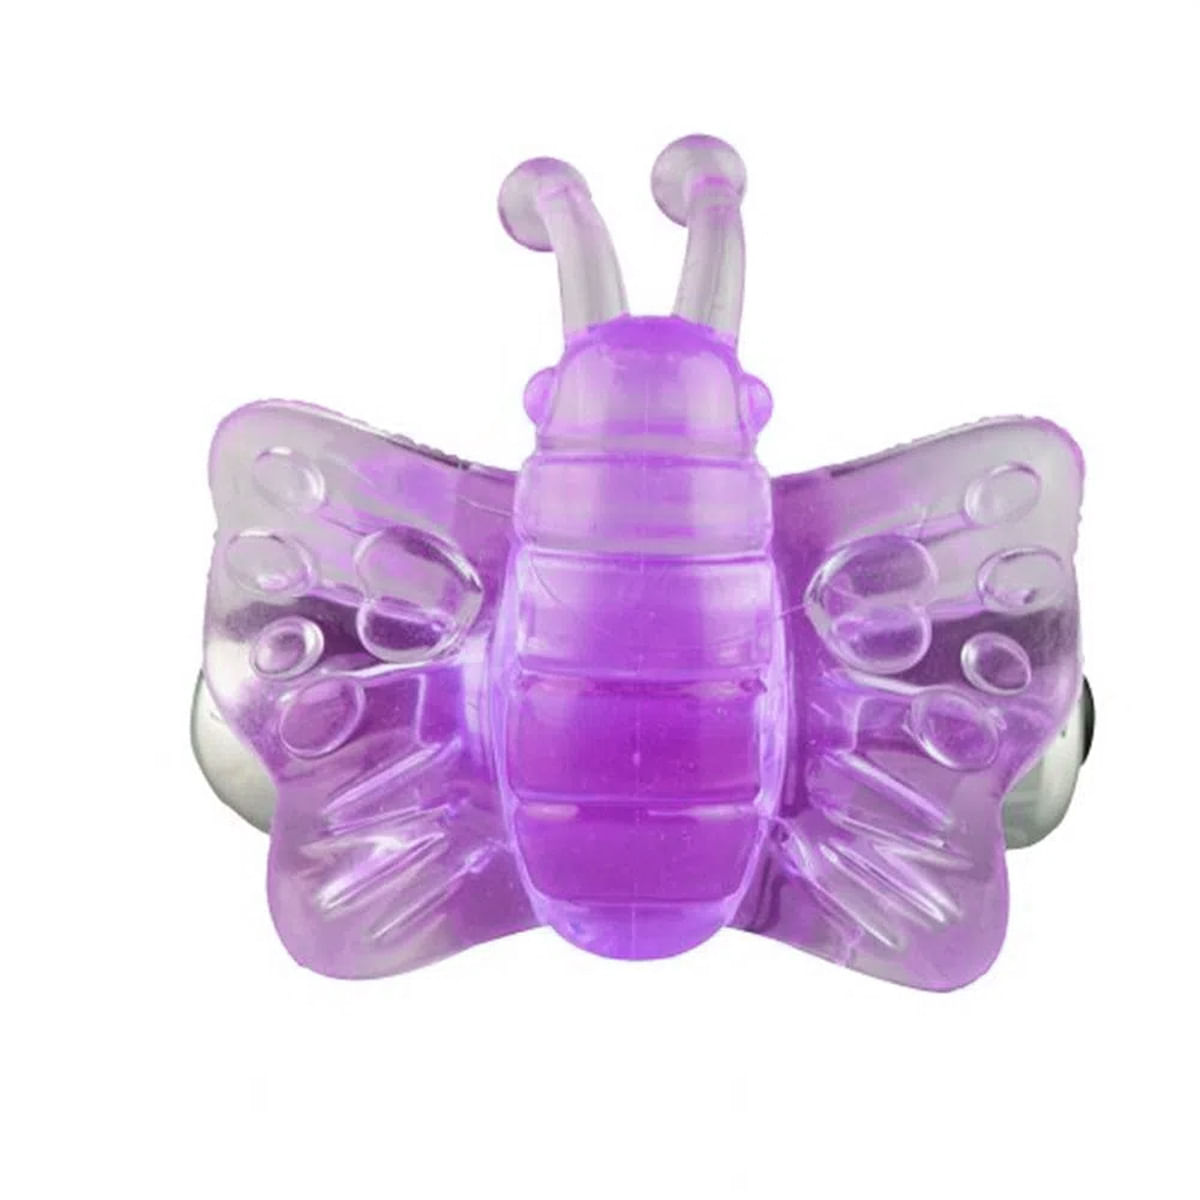 Anel Peniano Butterfly Aphrodisia com Micro Bullet a Prova d'Agua